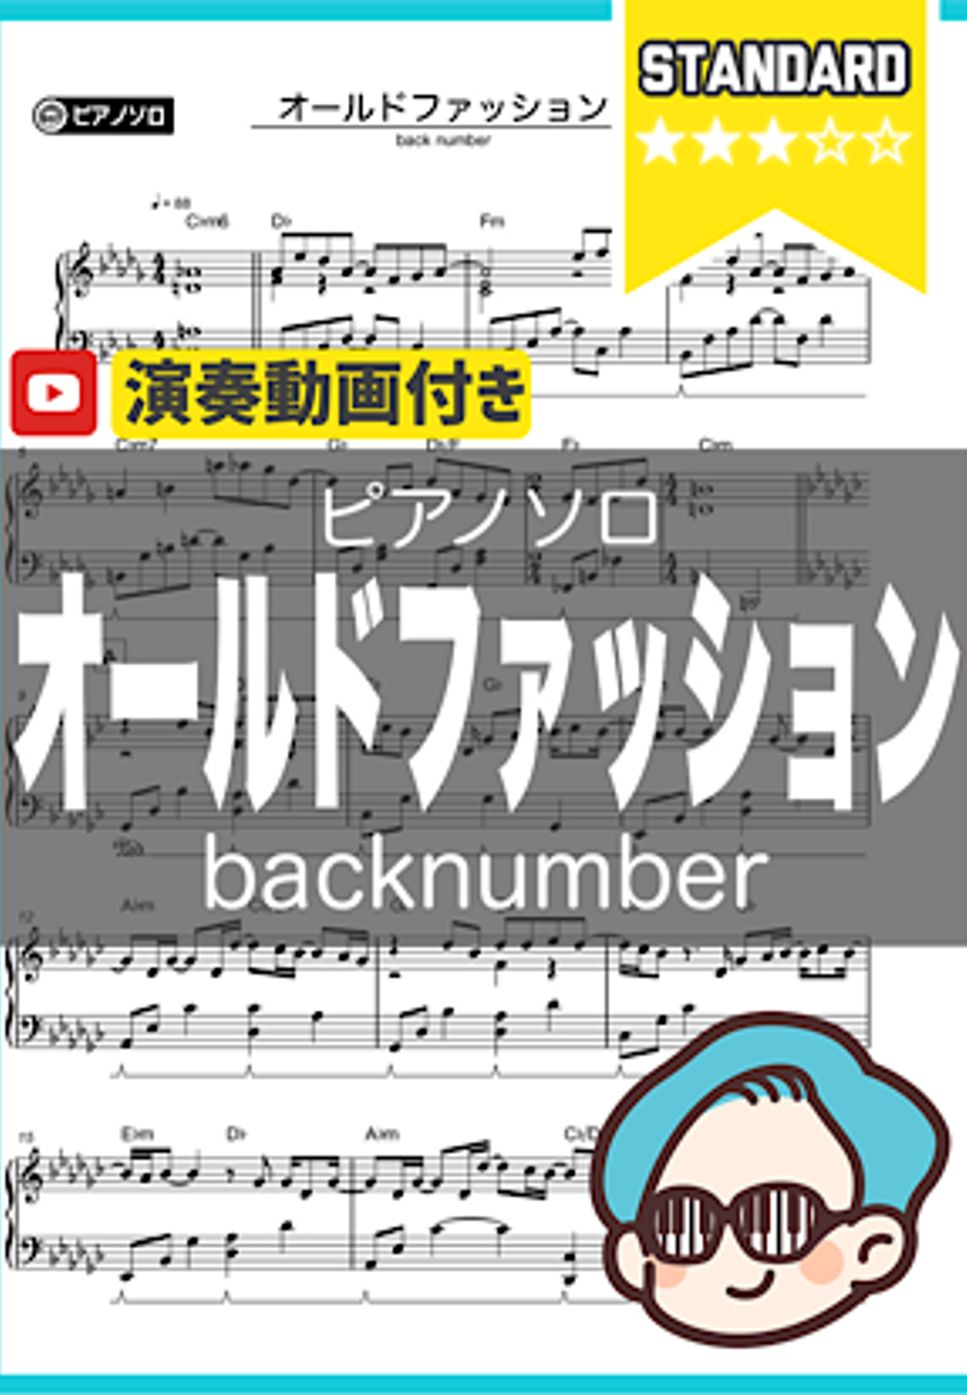 back number - オールドファッション by シータピアノ